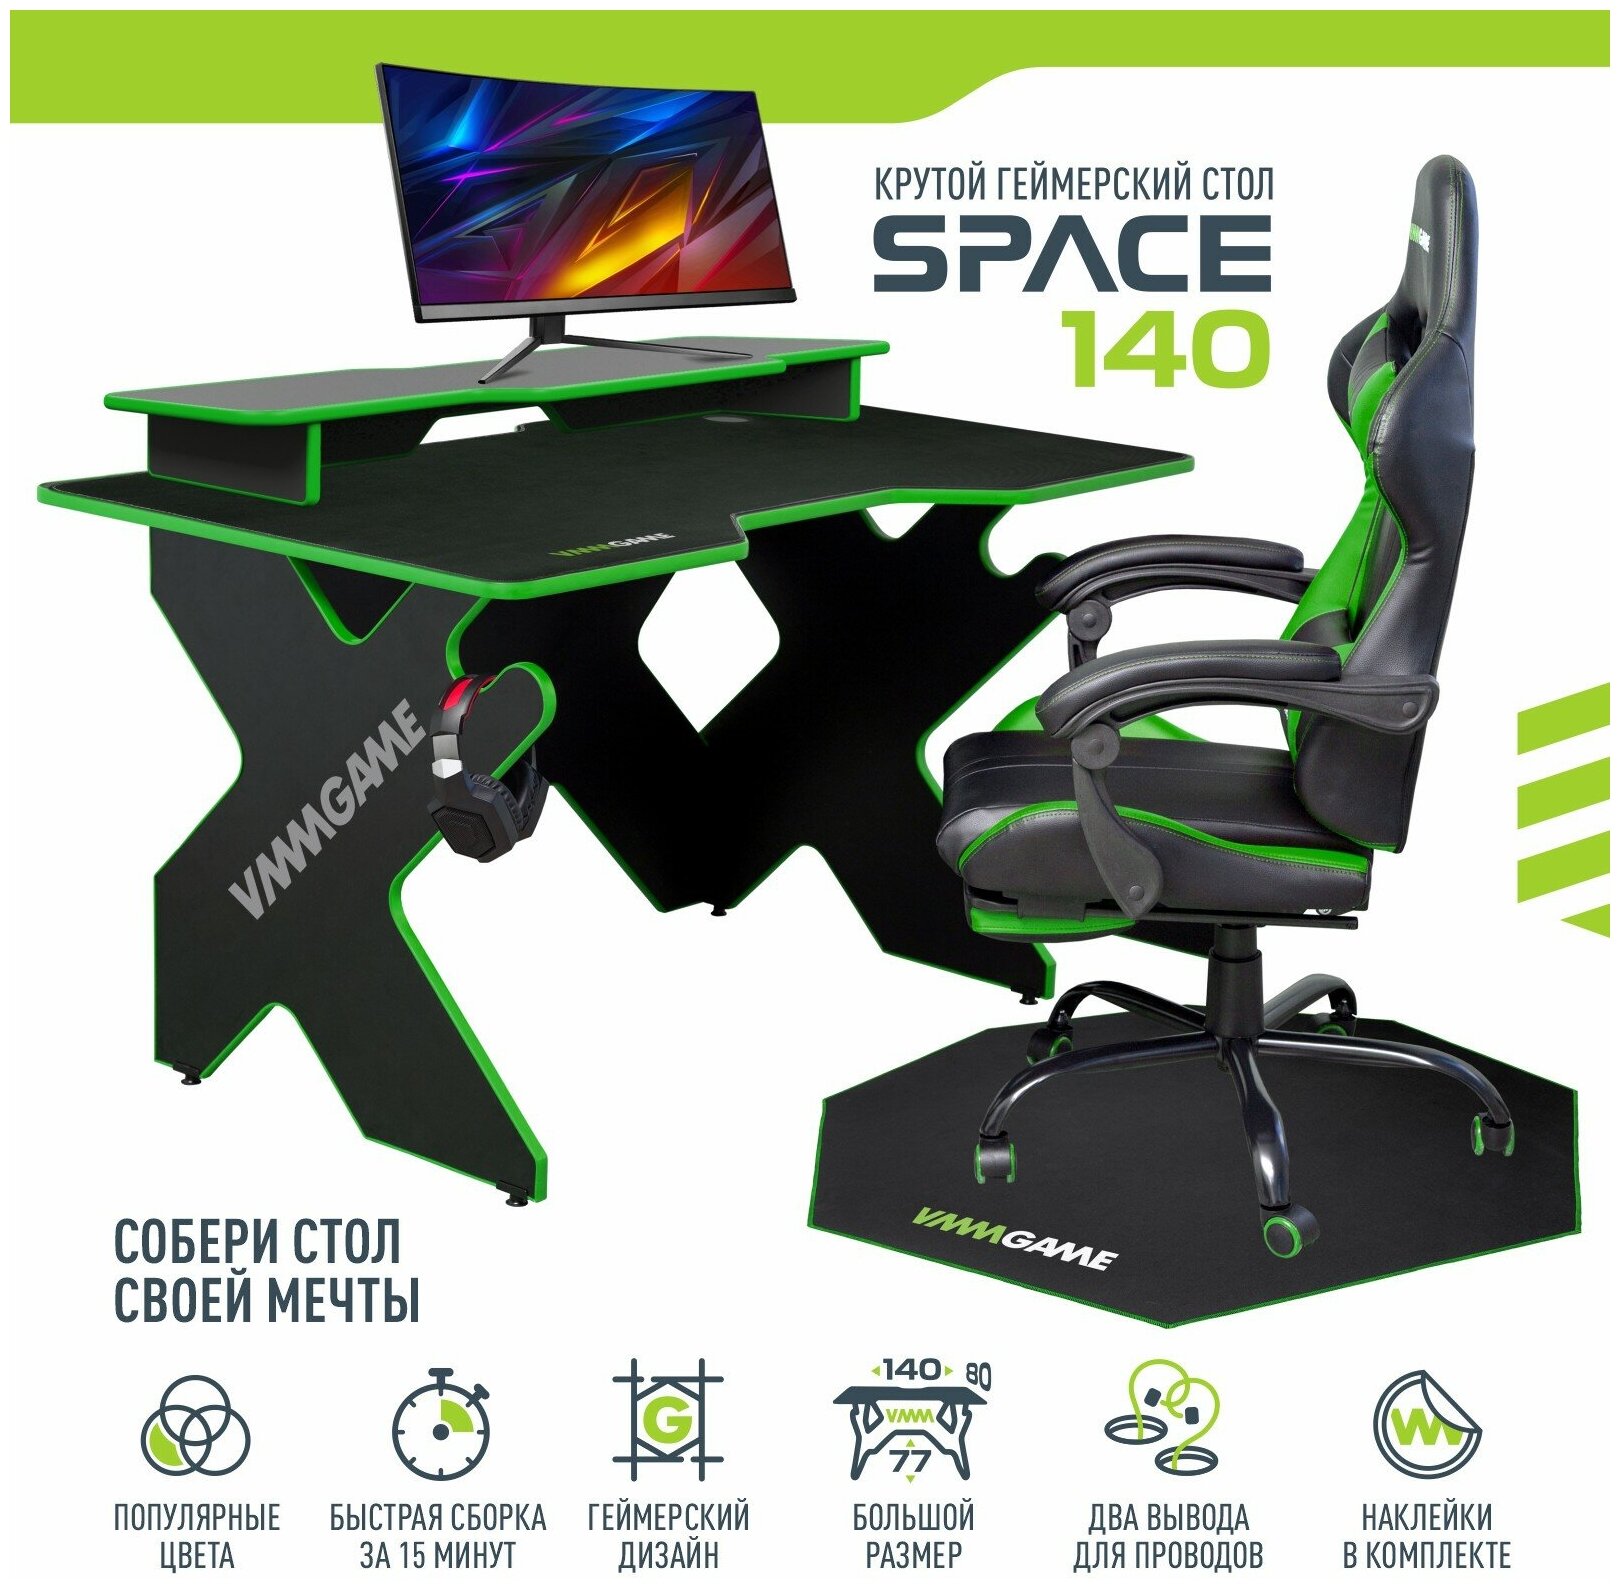 Игровой компьютерный стол VMMGAME SPACE DARK 140 Green